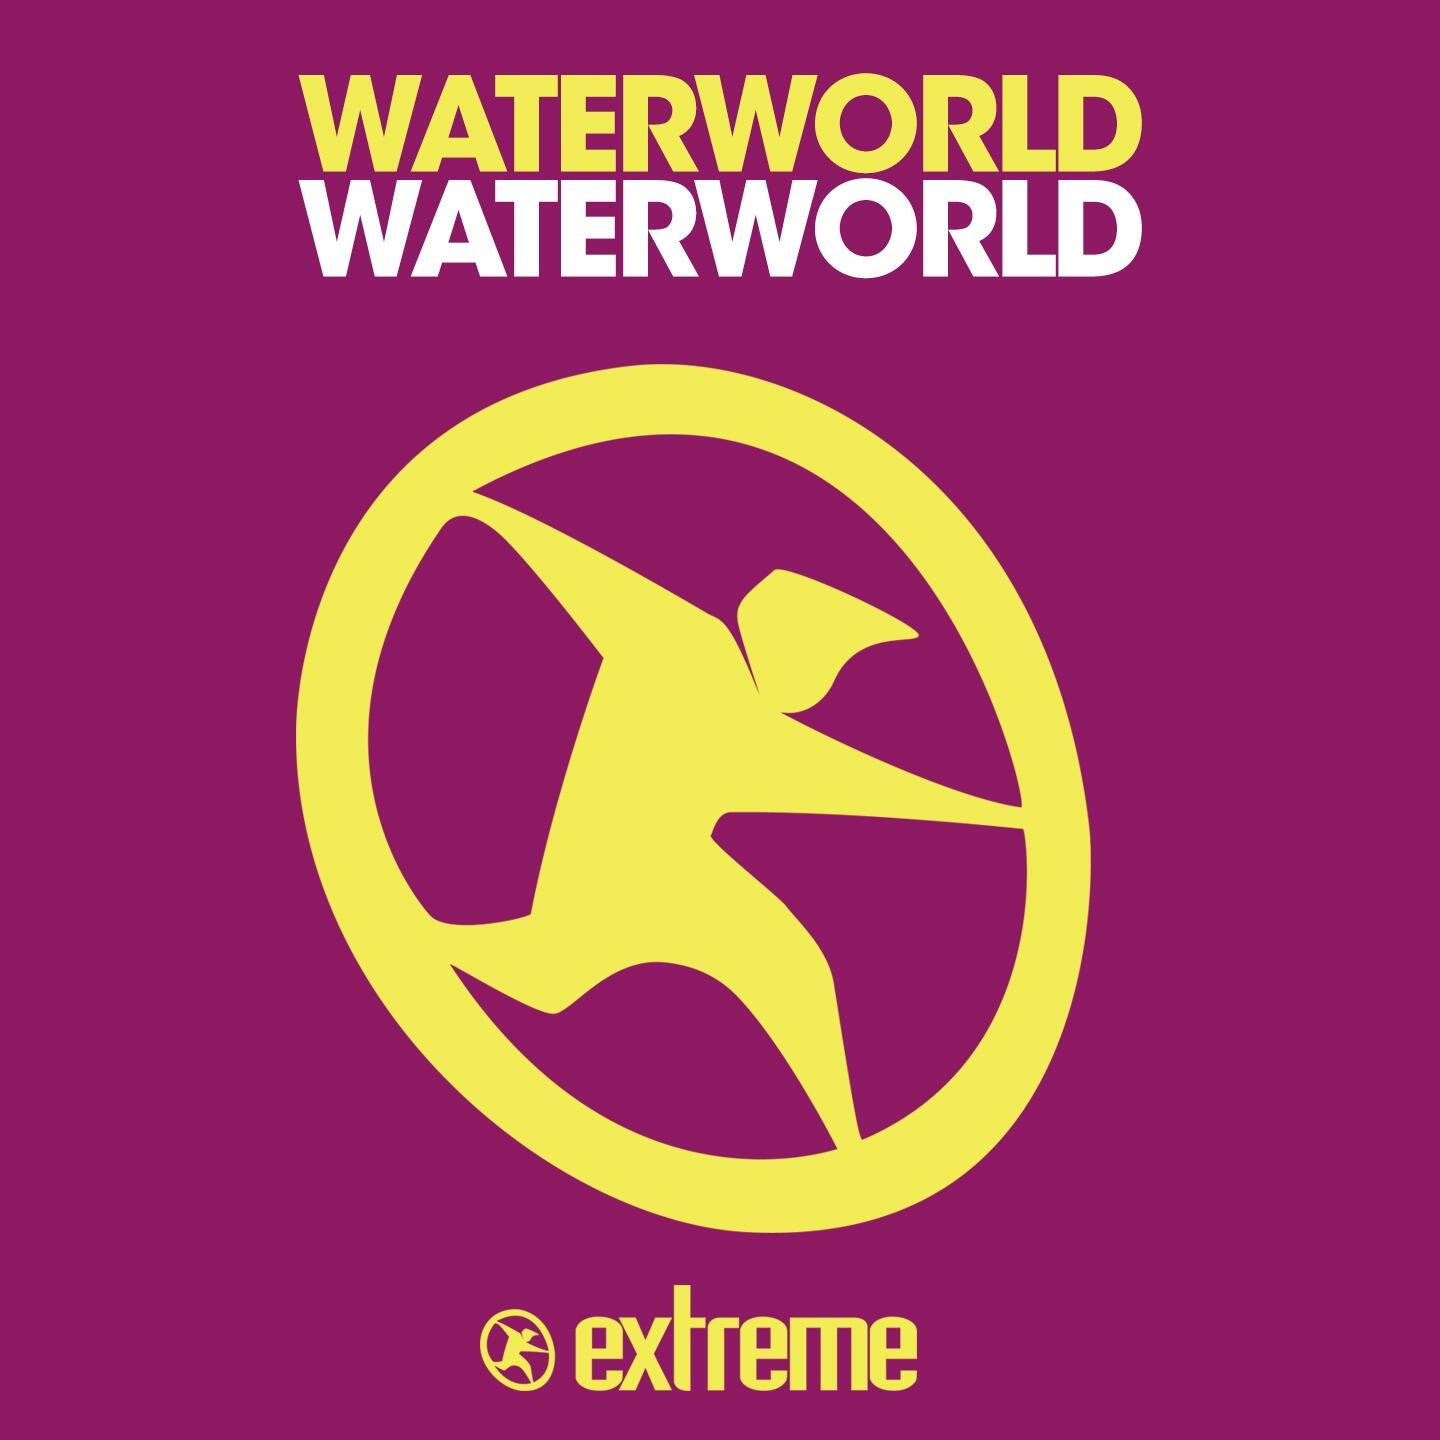 Waterworld (Waterworld) (1995) – C@rtelesmix